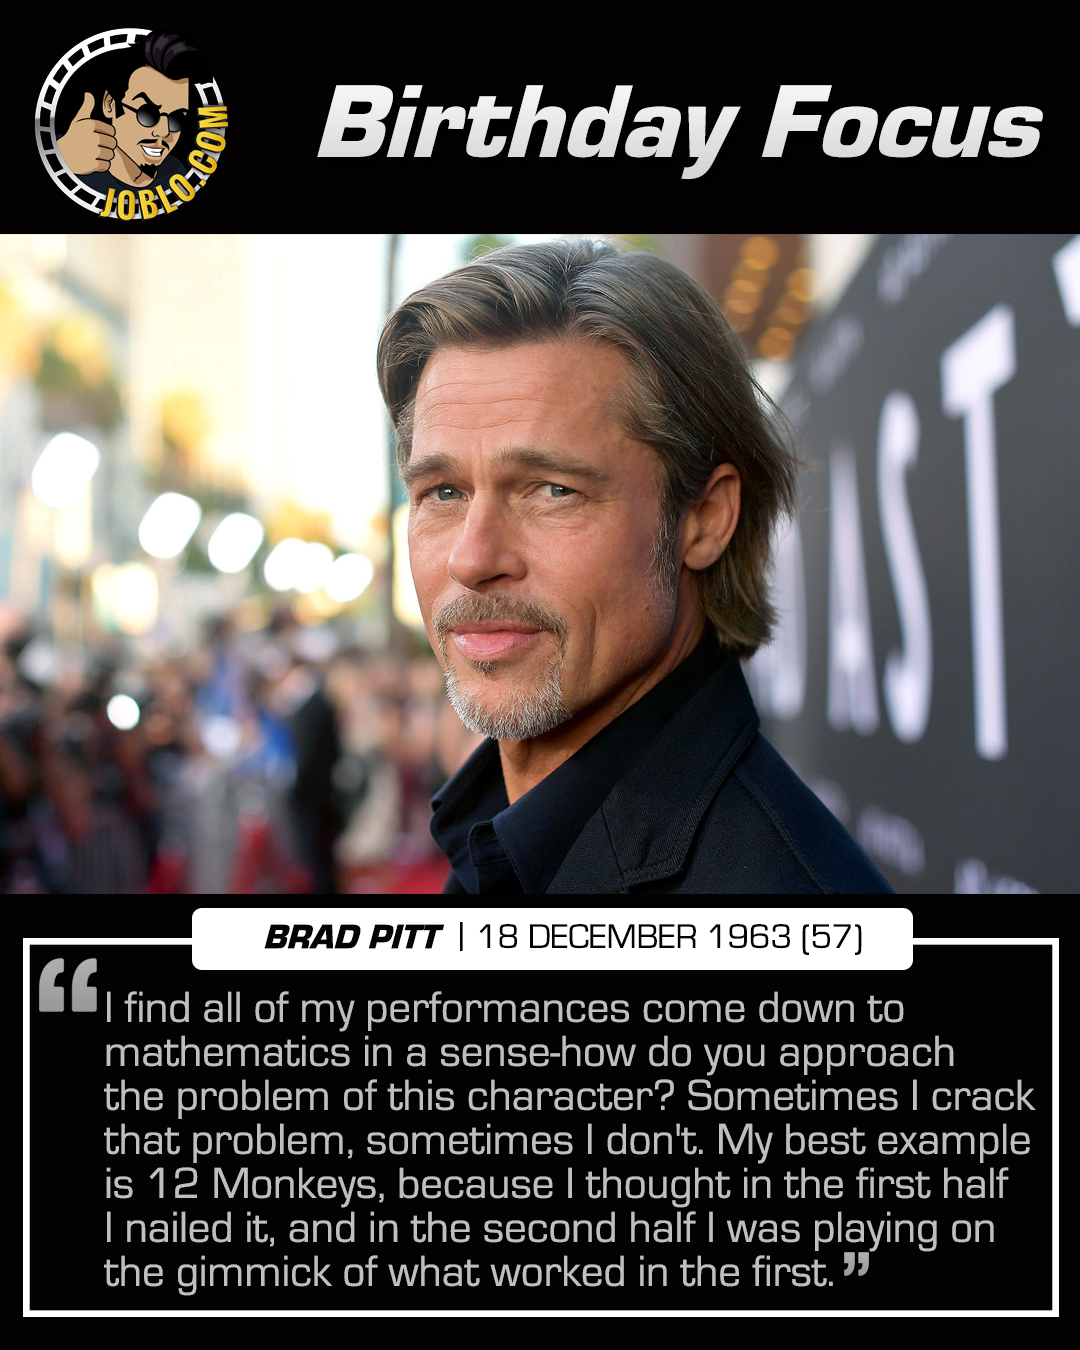 Wishing a very happy 57th birthday to Brad Pitt! 